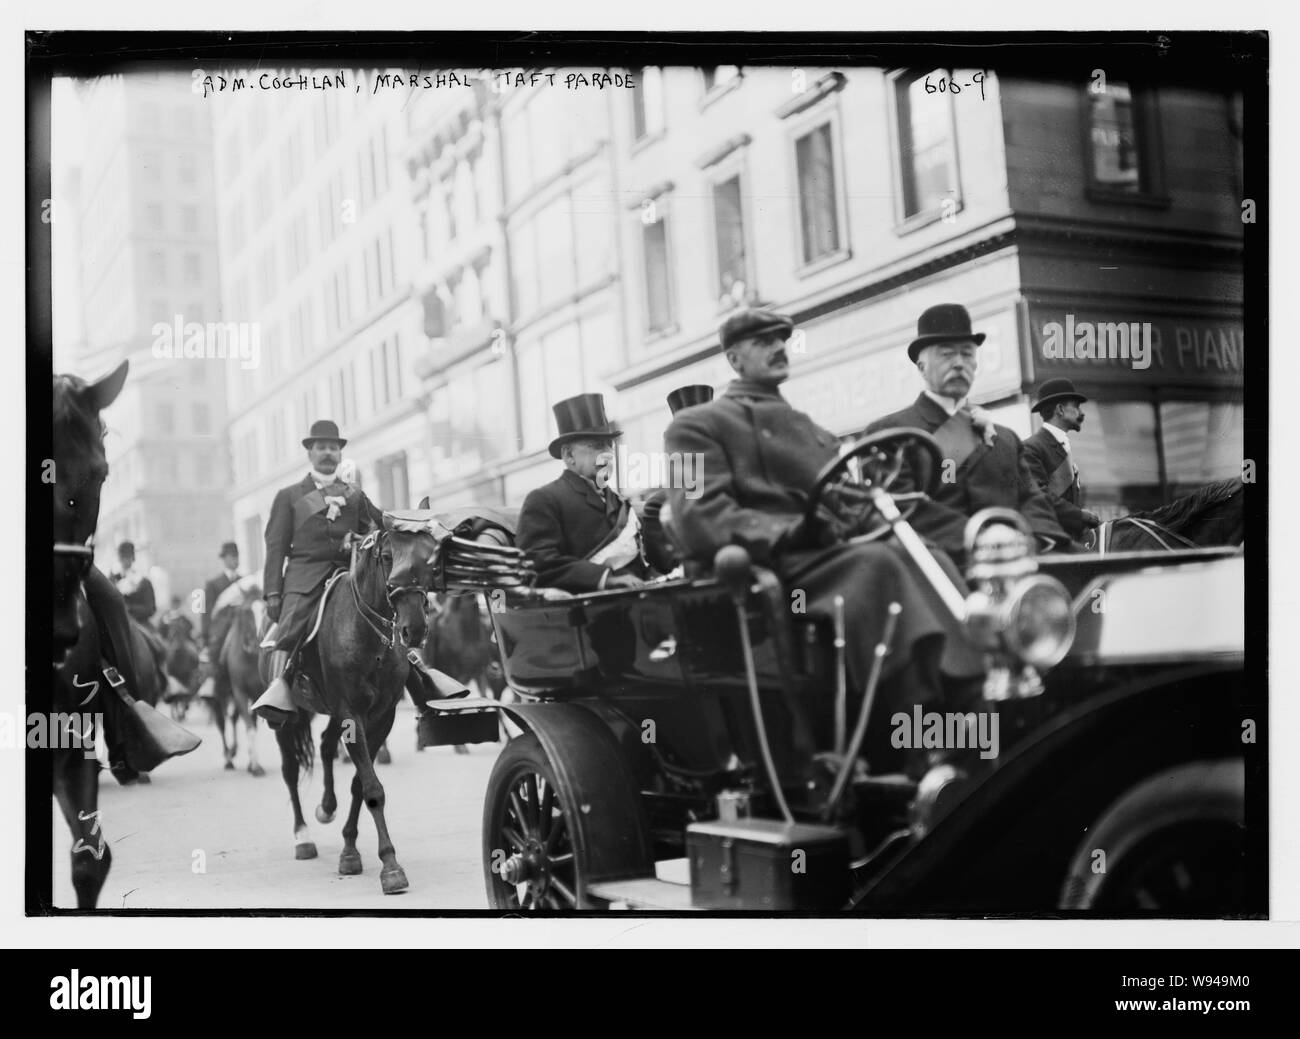 Adm. Coghlan, Marshal, Taft Parade New York Stock Photo